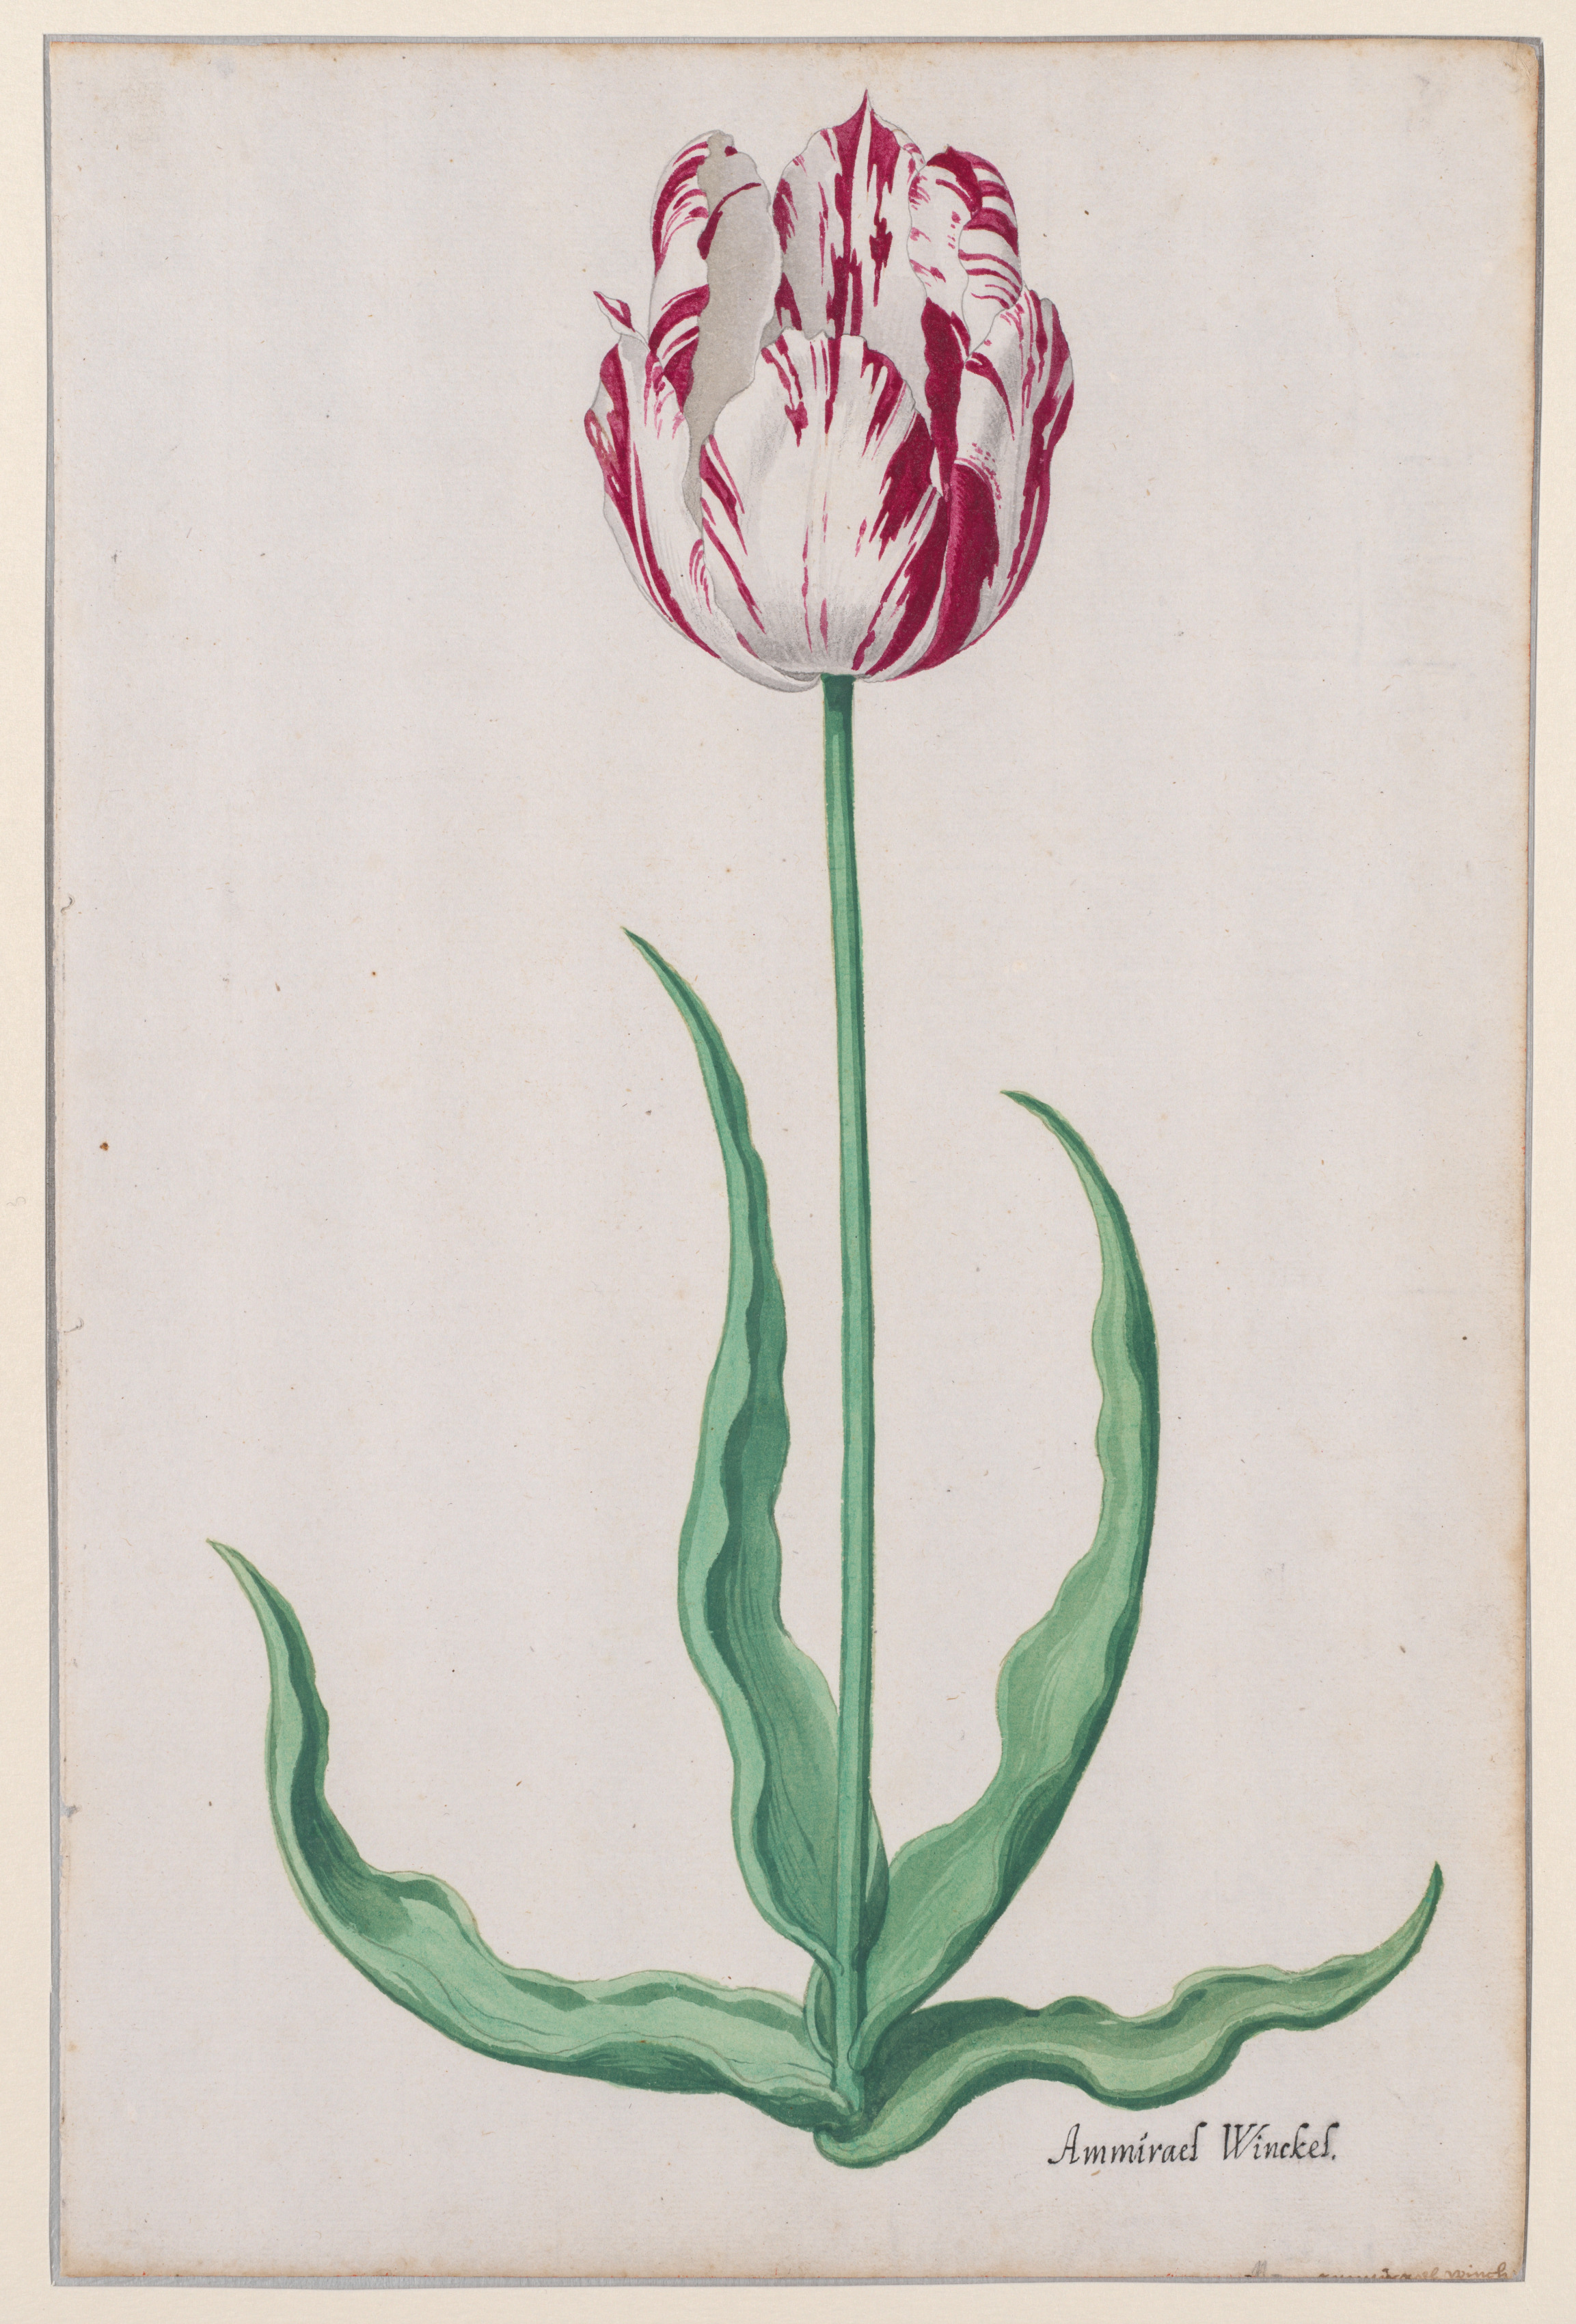 Study of a Tulip (Ammirael Winckel)